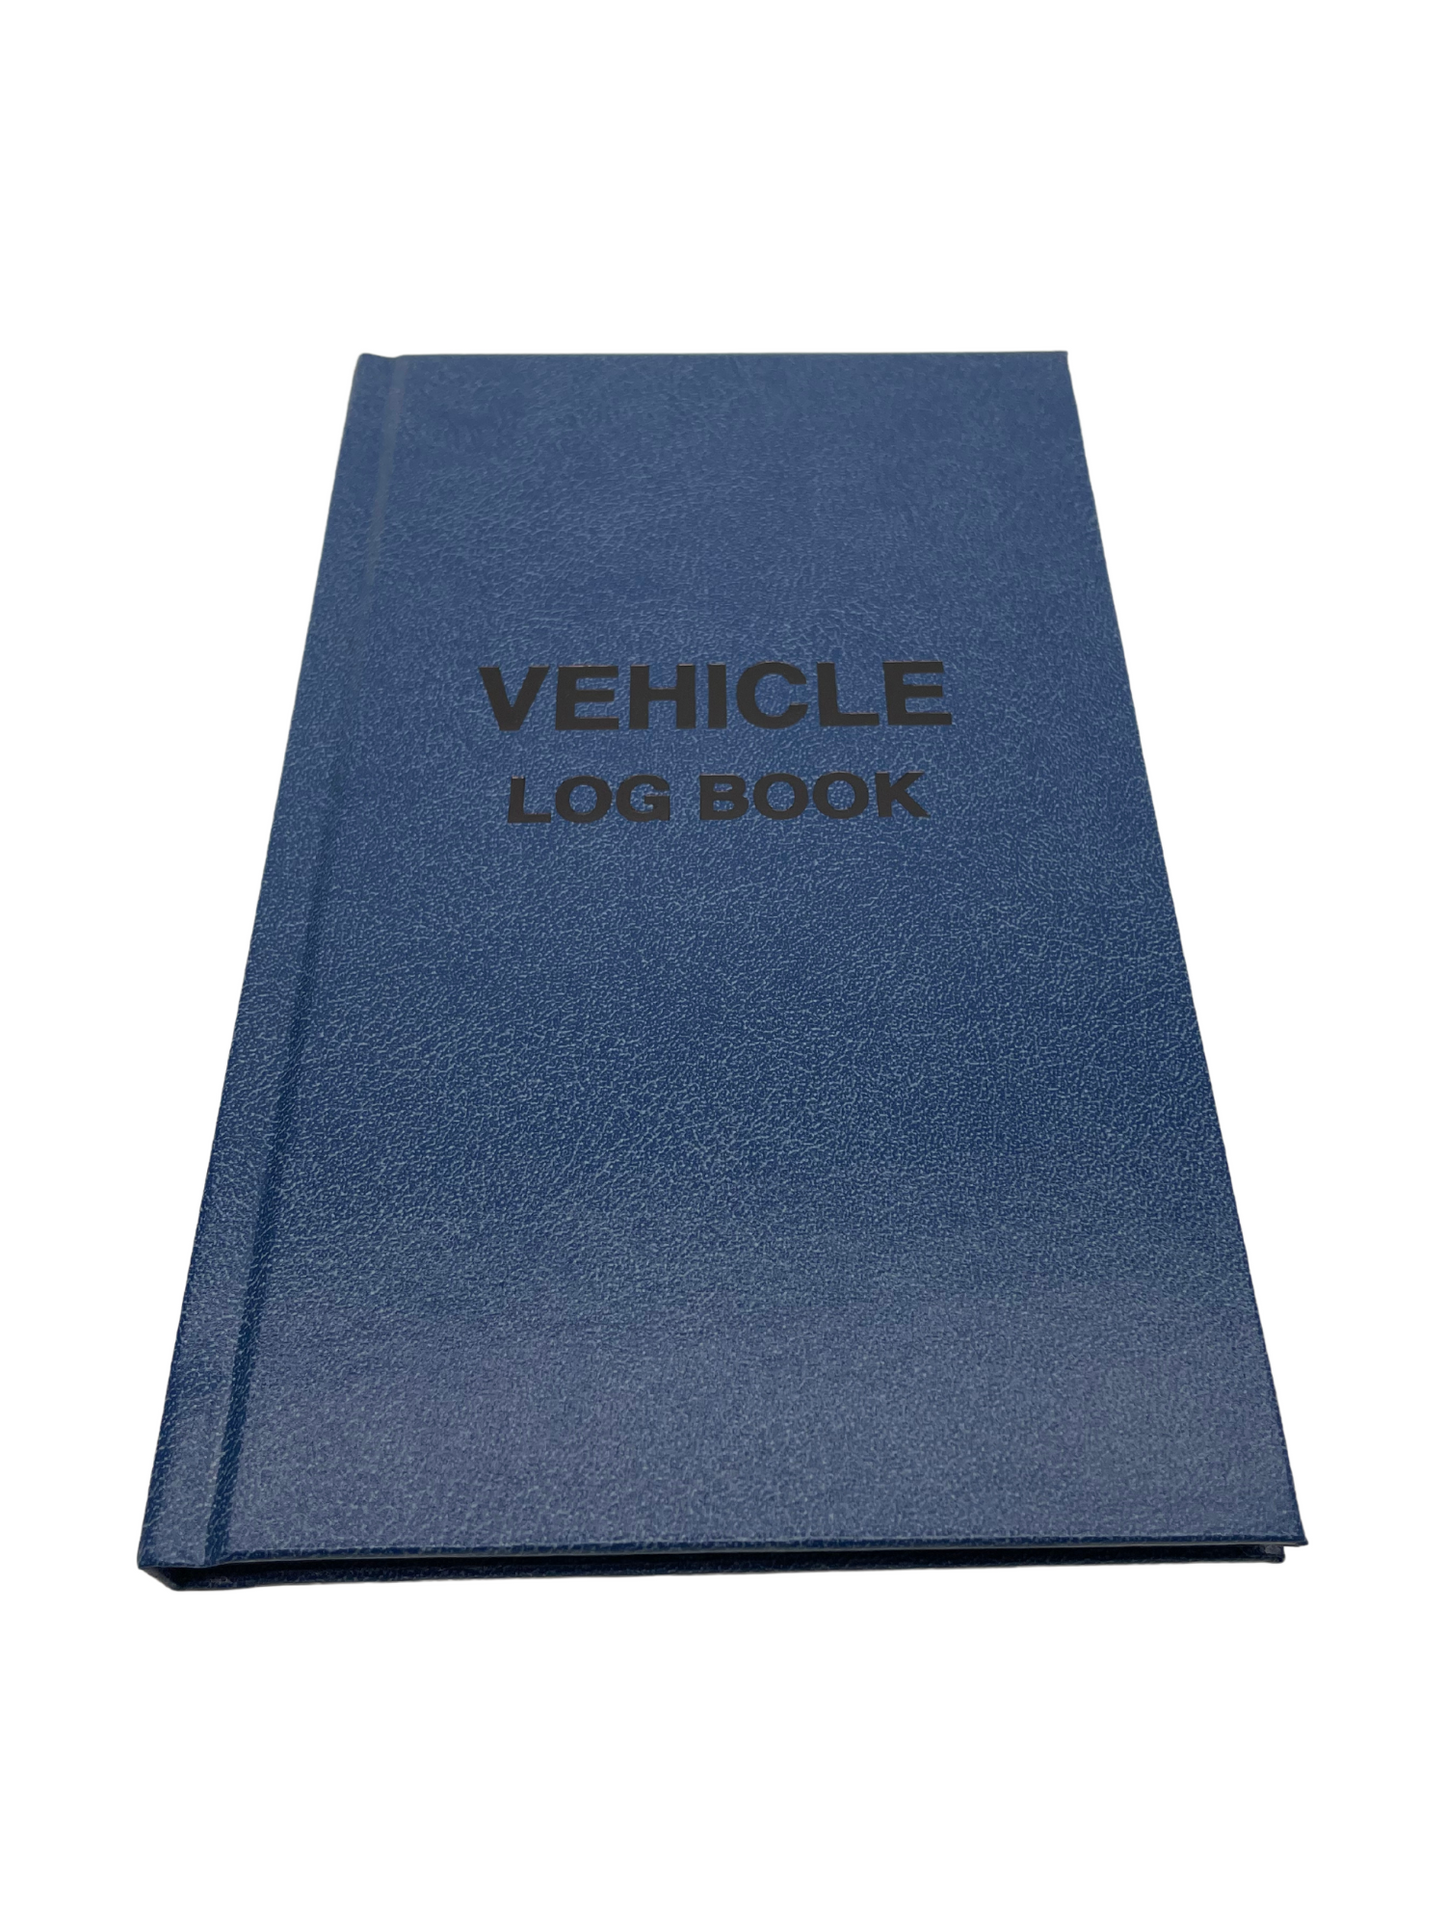 Vehicle Log Book #603